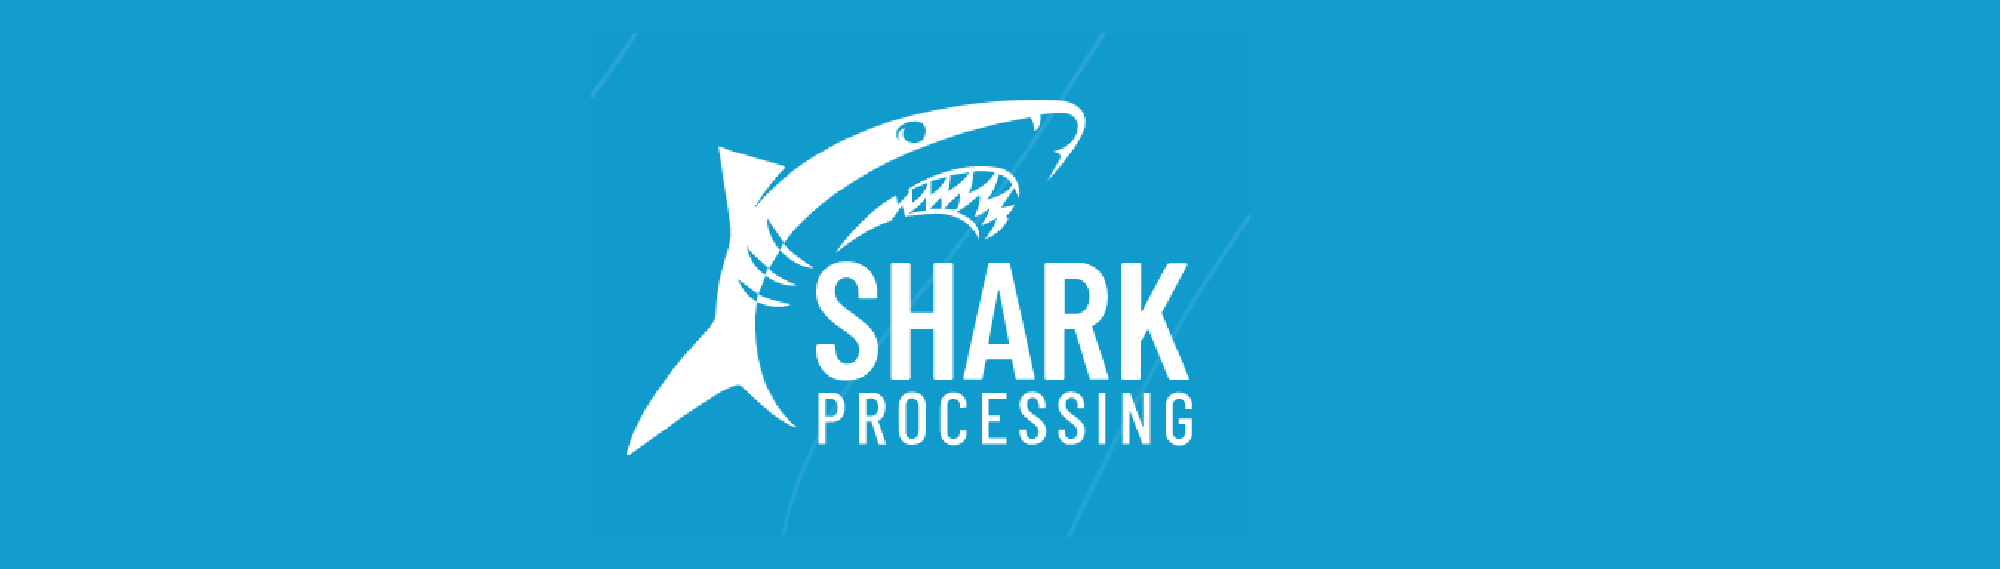 image of shark processing logo